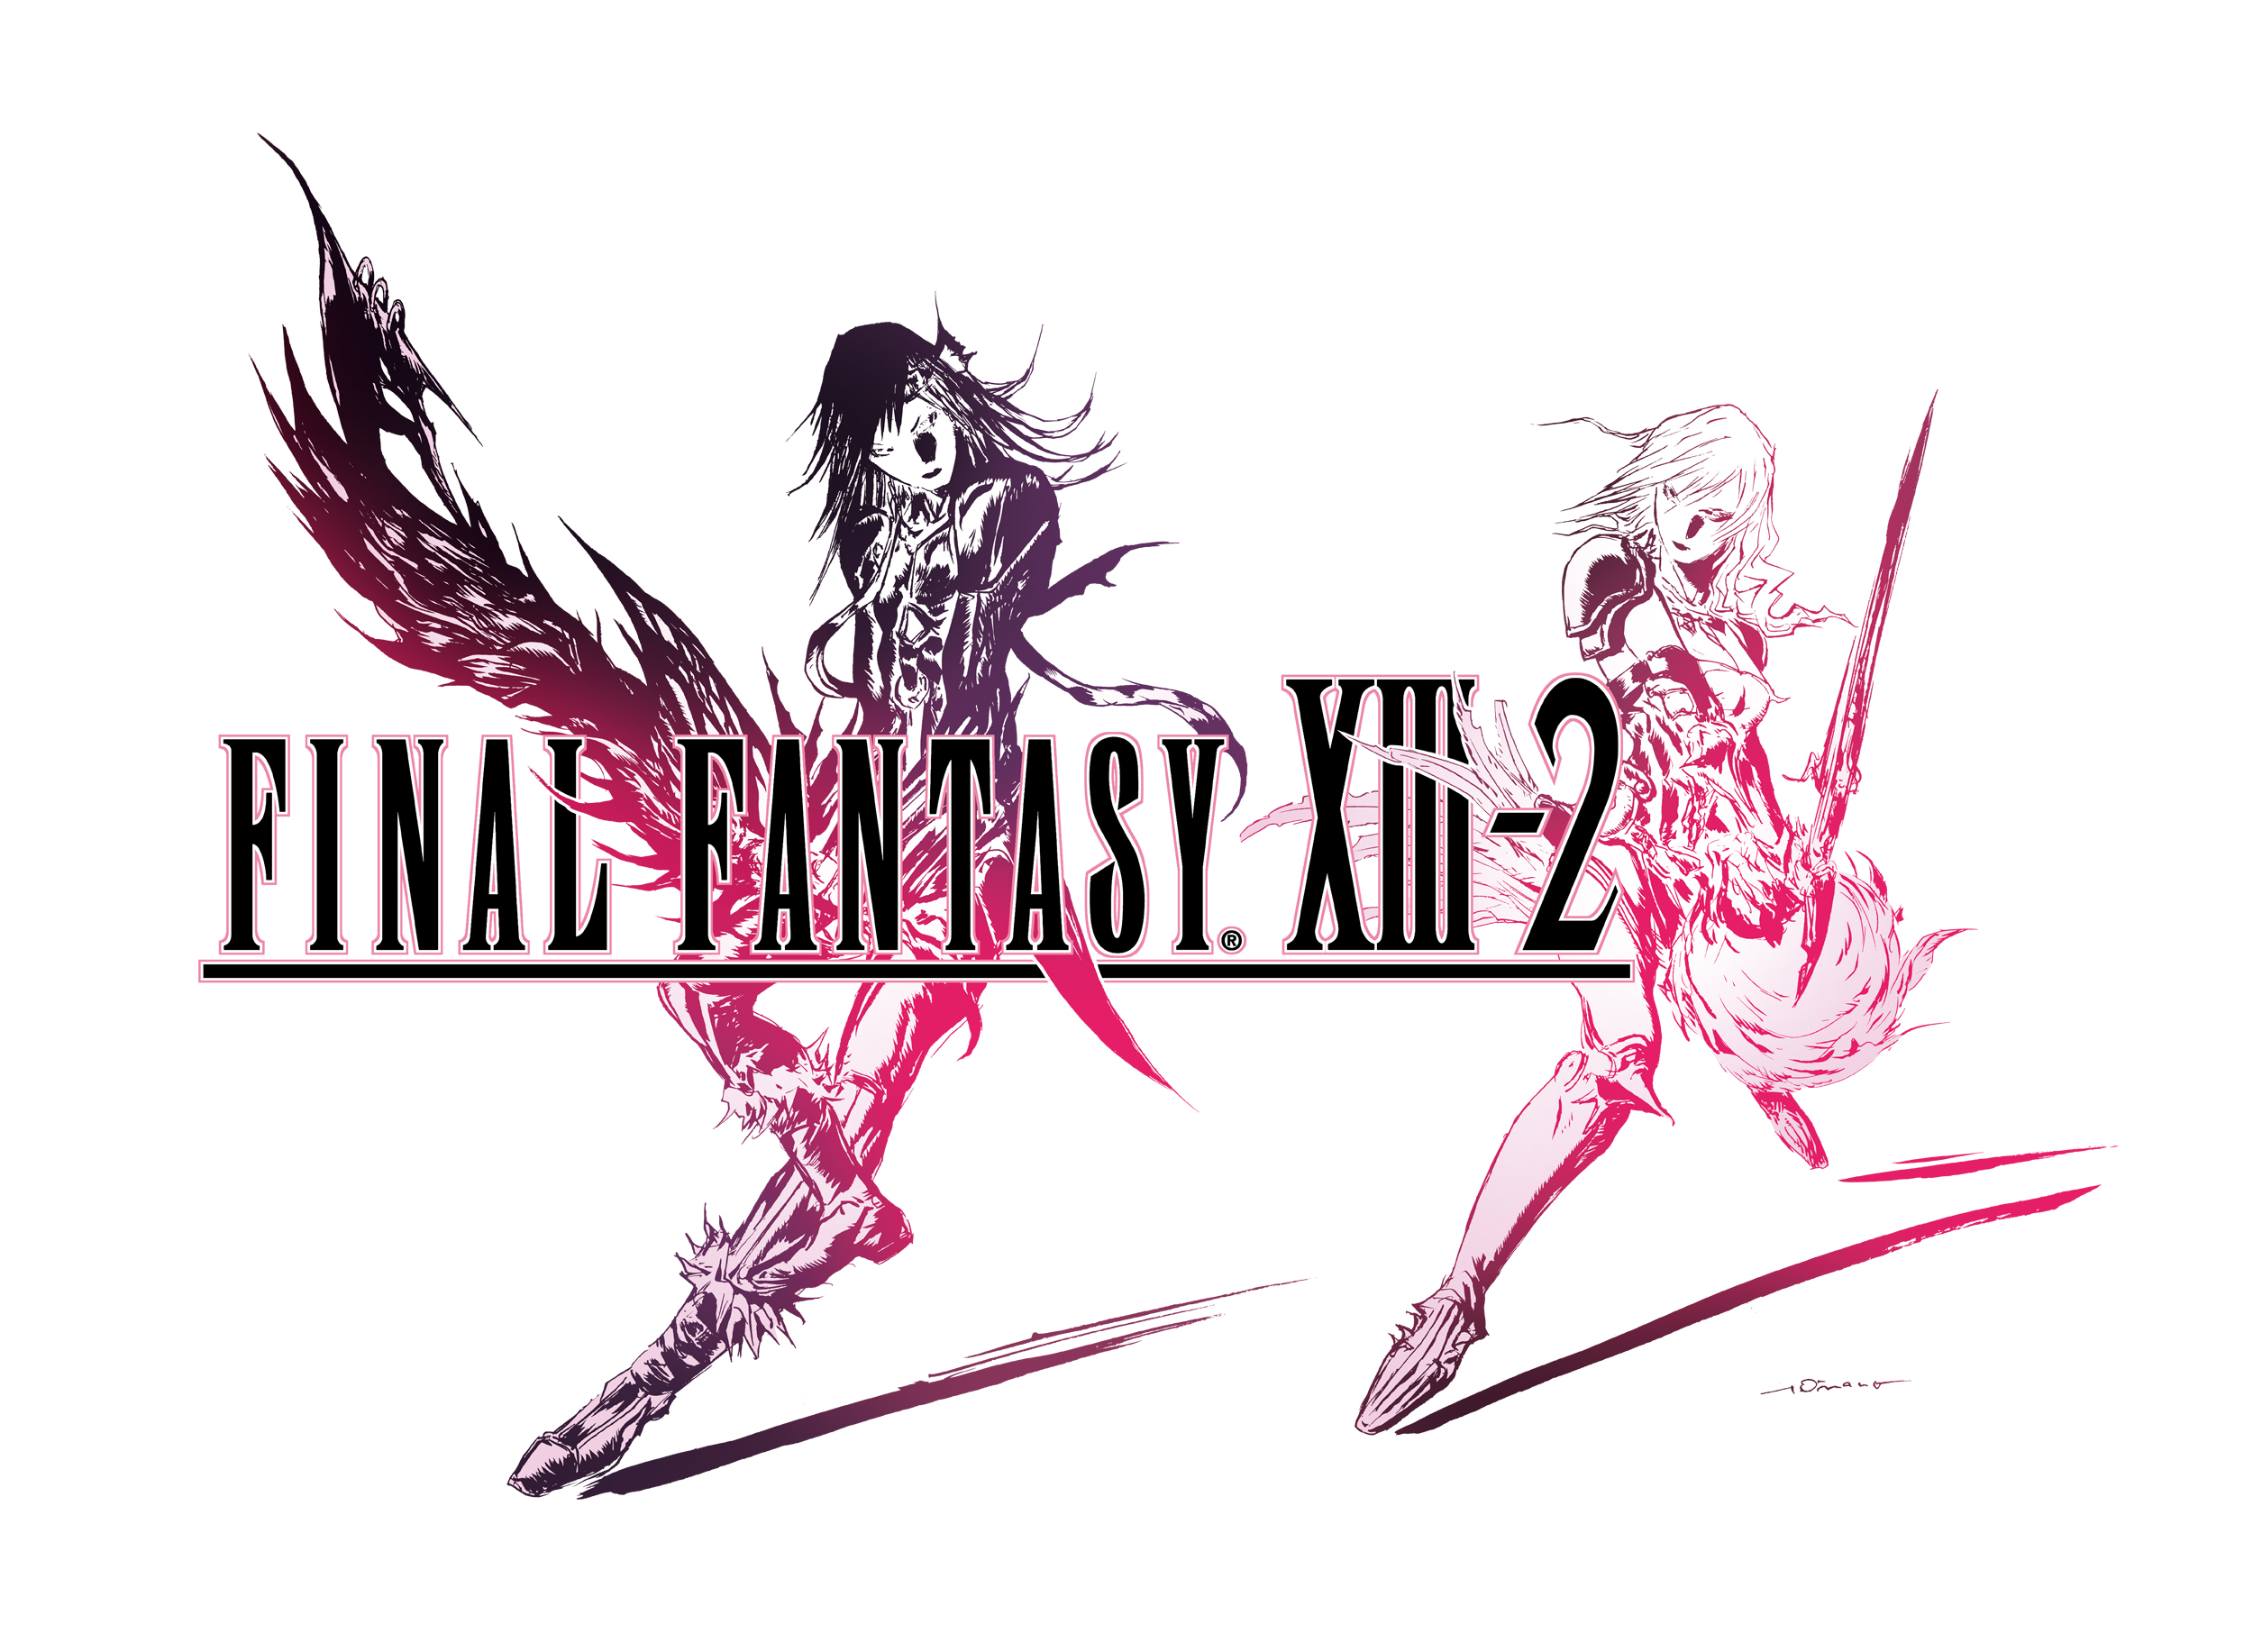 Final Fantasy Xiii 2 Guide And Walkthrough